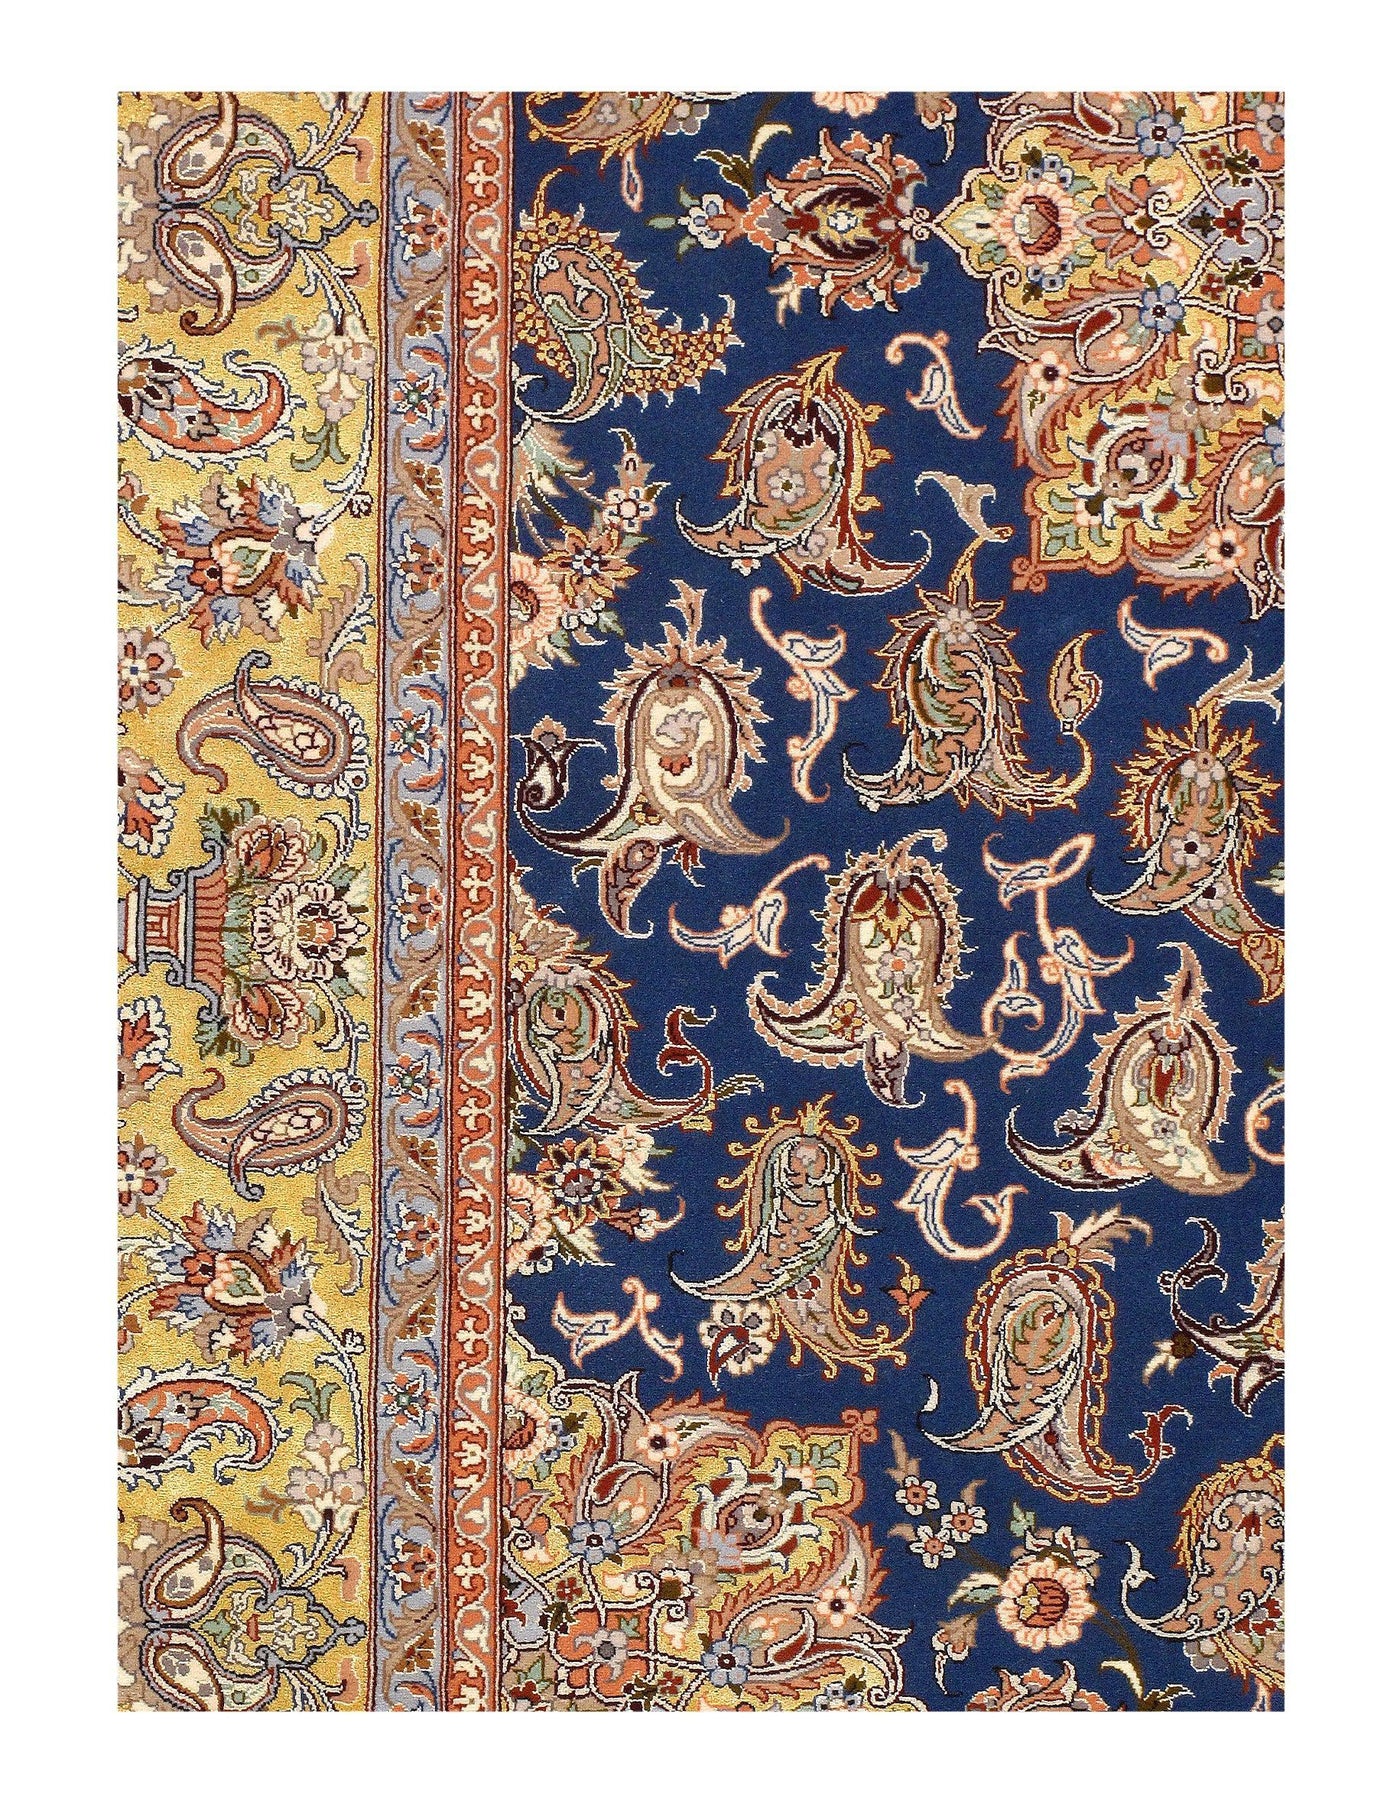 Canvello Persian Isfahan Silk & Wool Blue Gold Rug - 4'7" x 6'6"